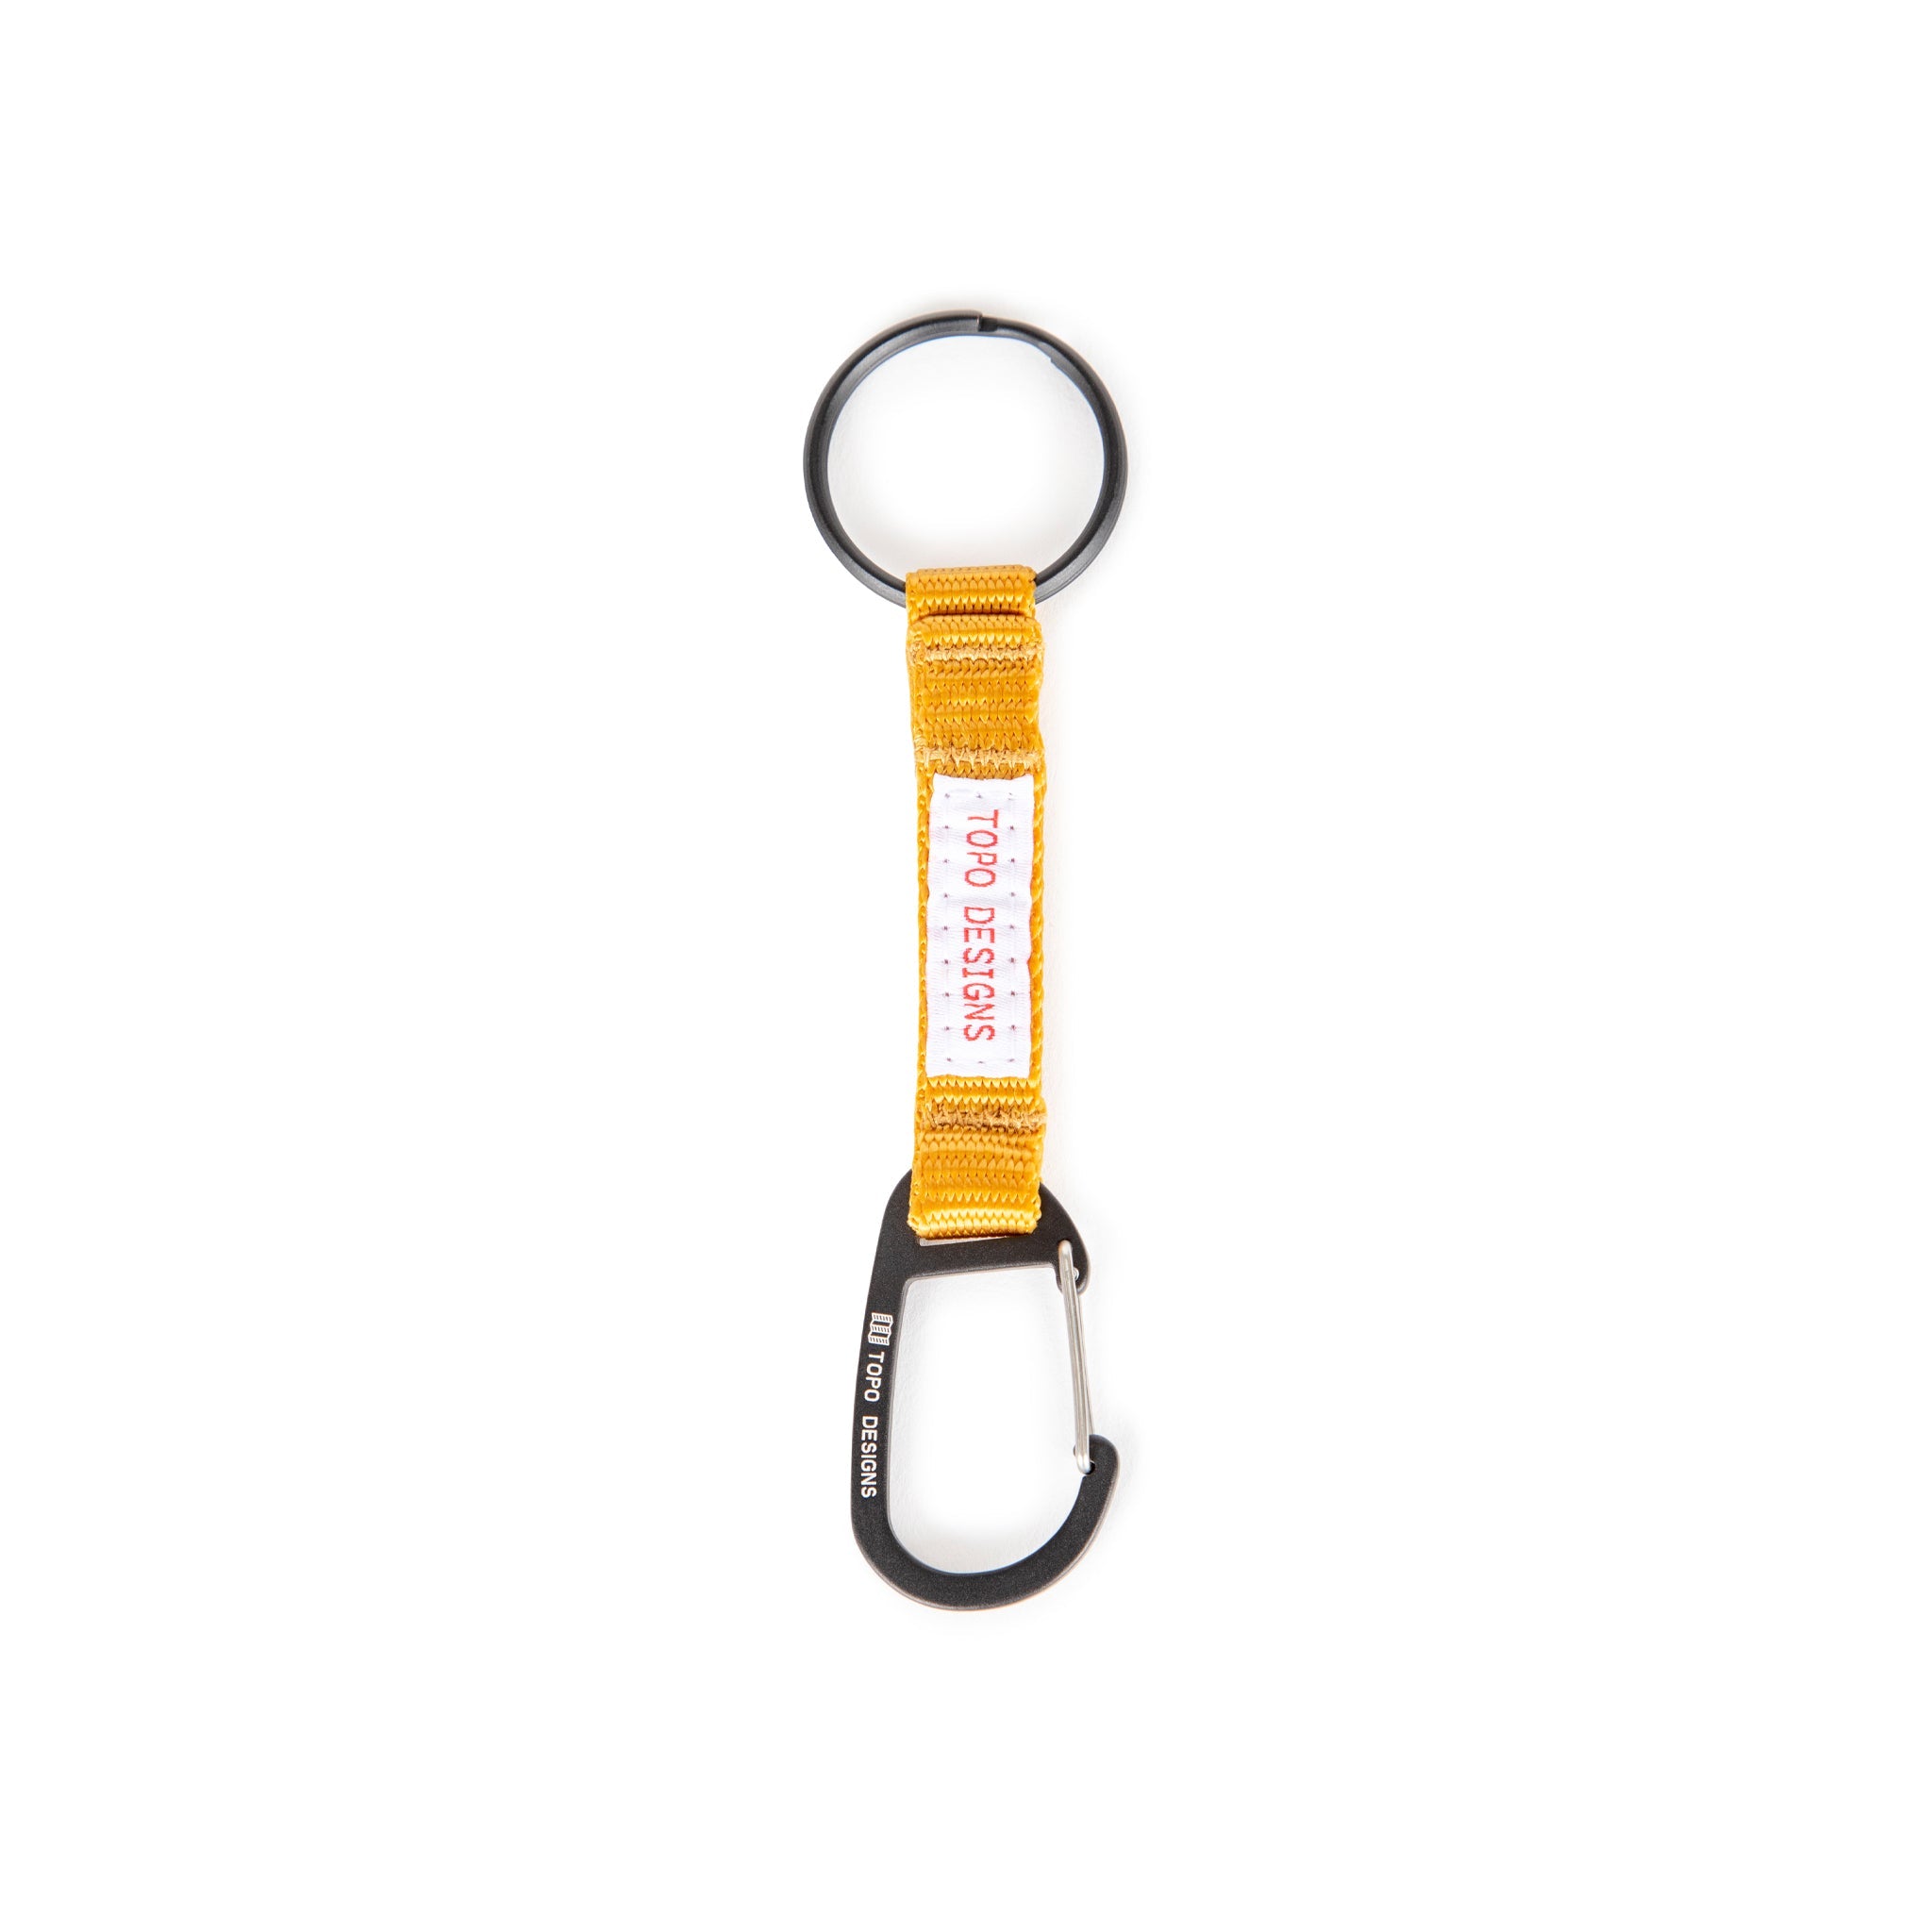 Topo Designs Key Clip carabiner keychain in "Mustard" yellow.